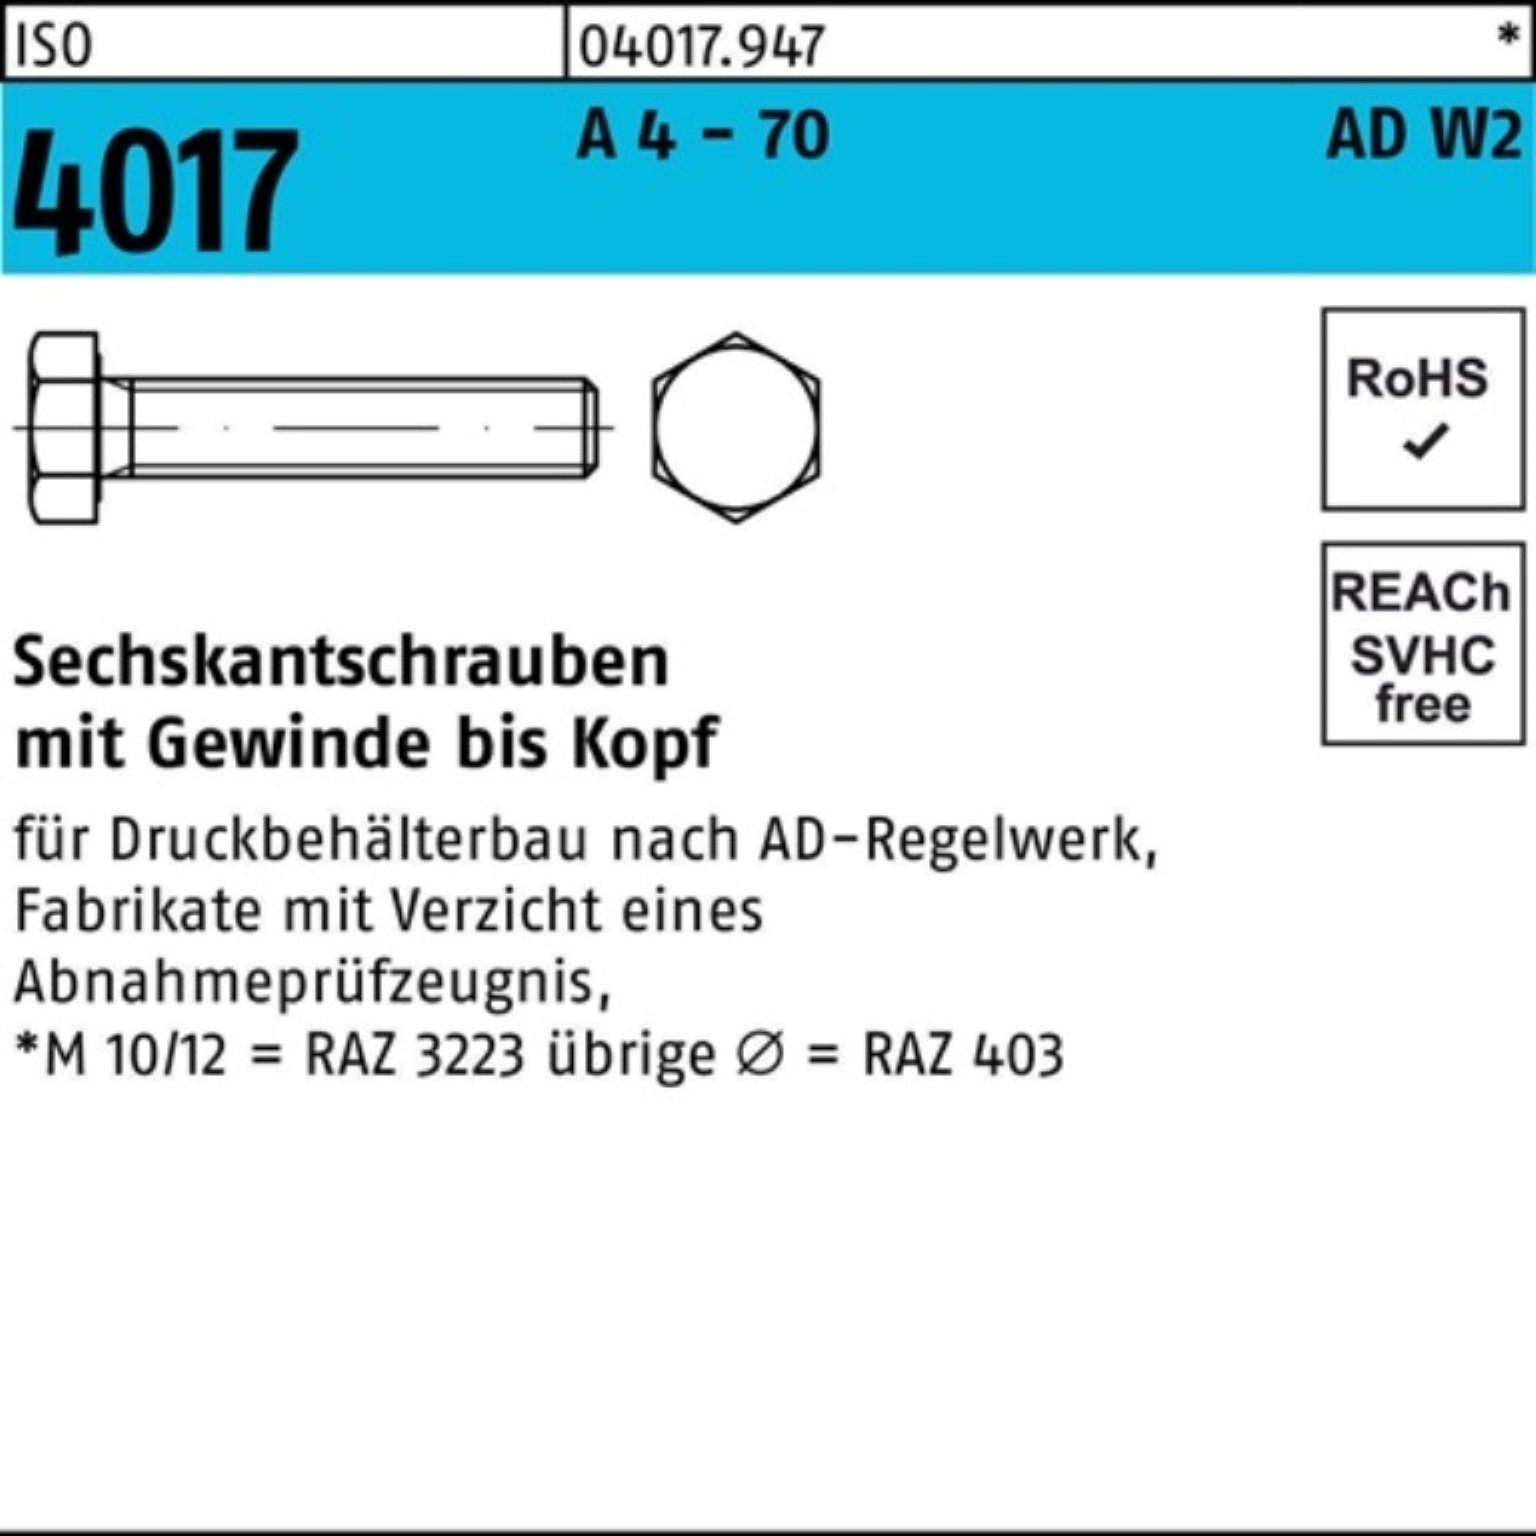 A VG Sechskantschraube - 100er AD-W2 M20x 70 4017 Sechskantschraube St Bufab 4 70 Pack ISO 25